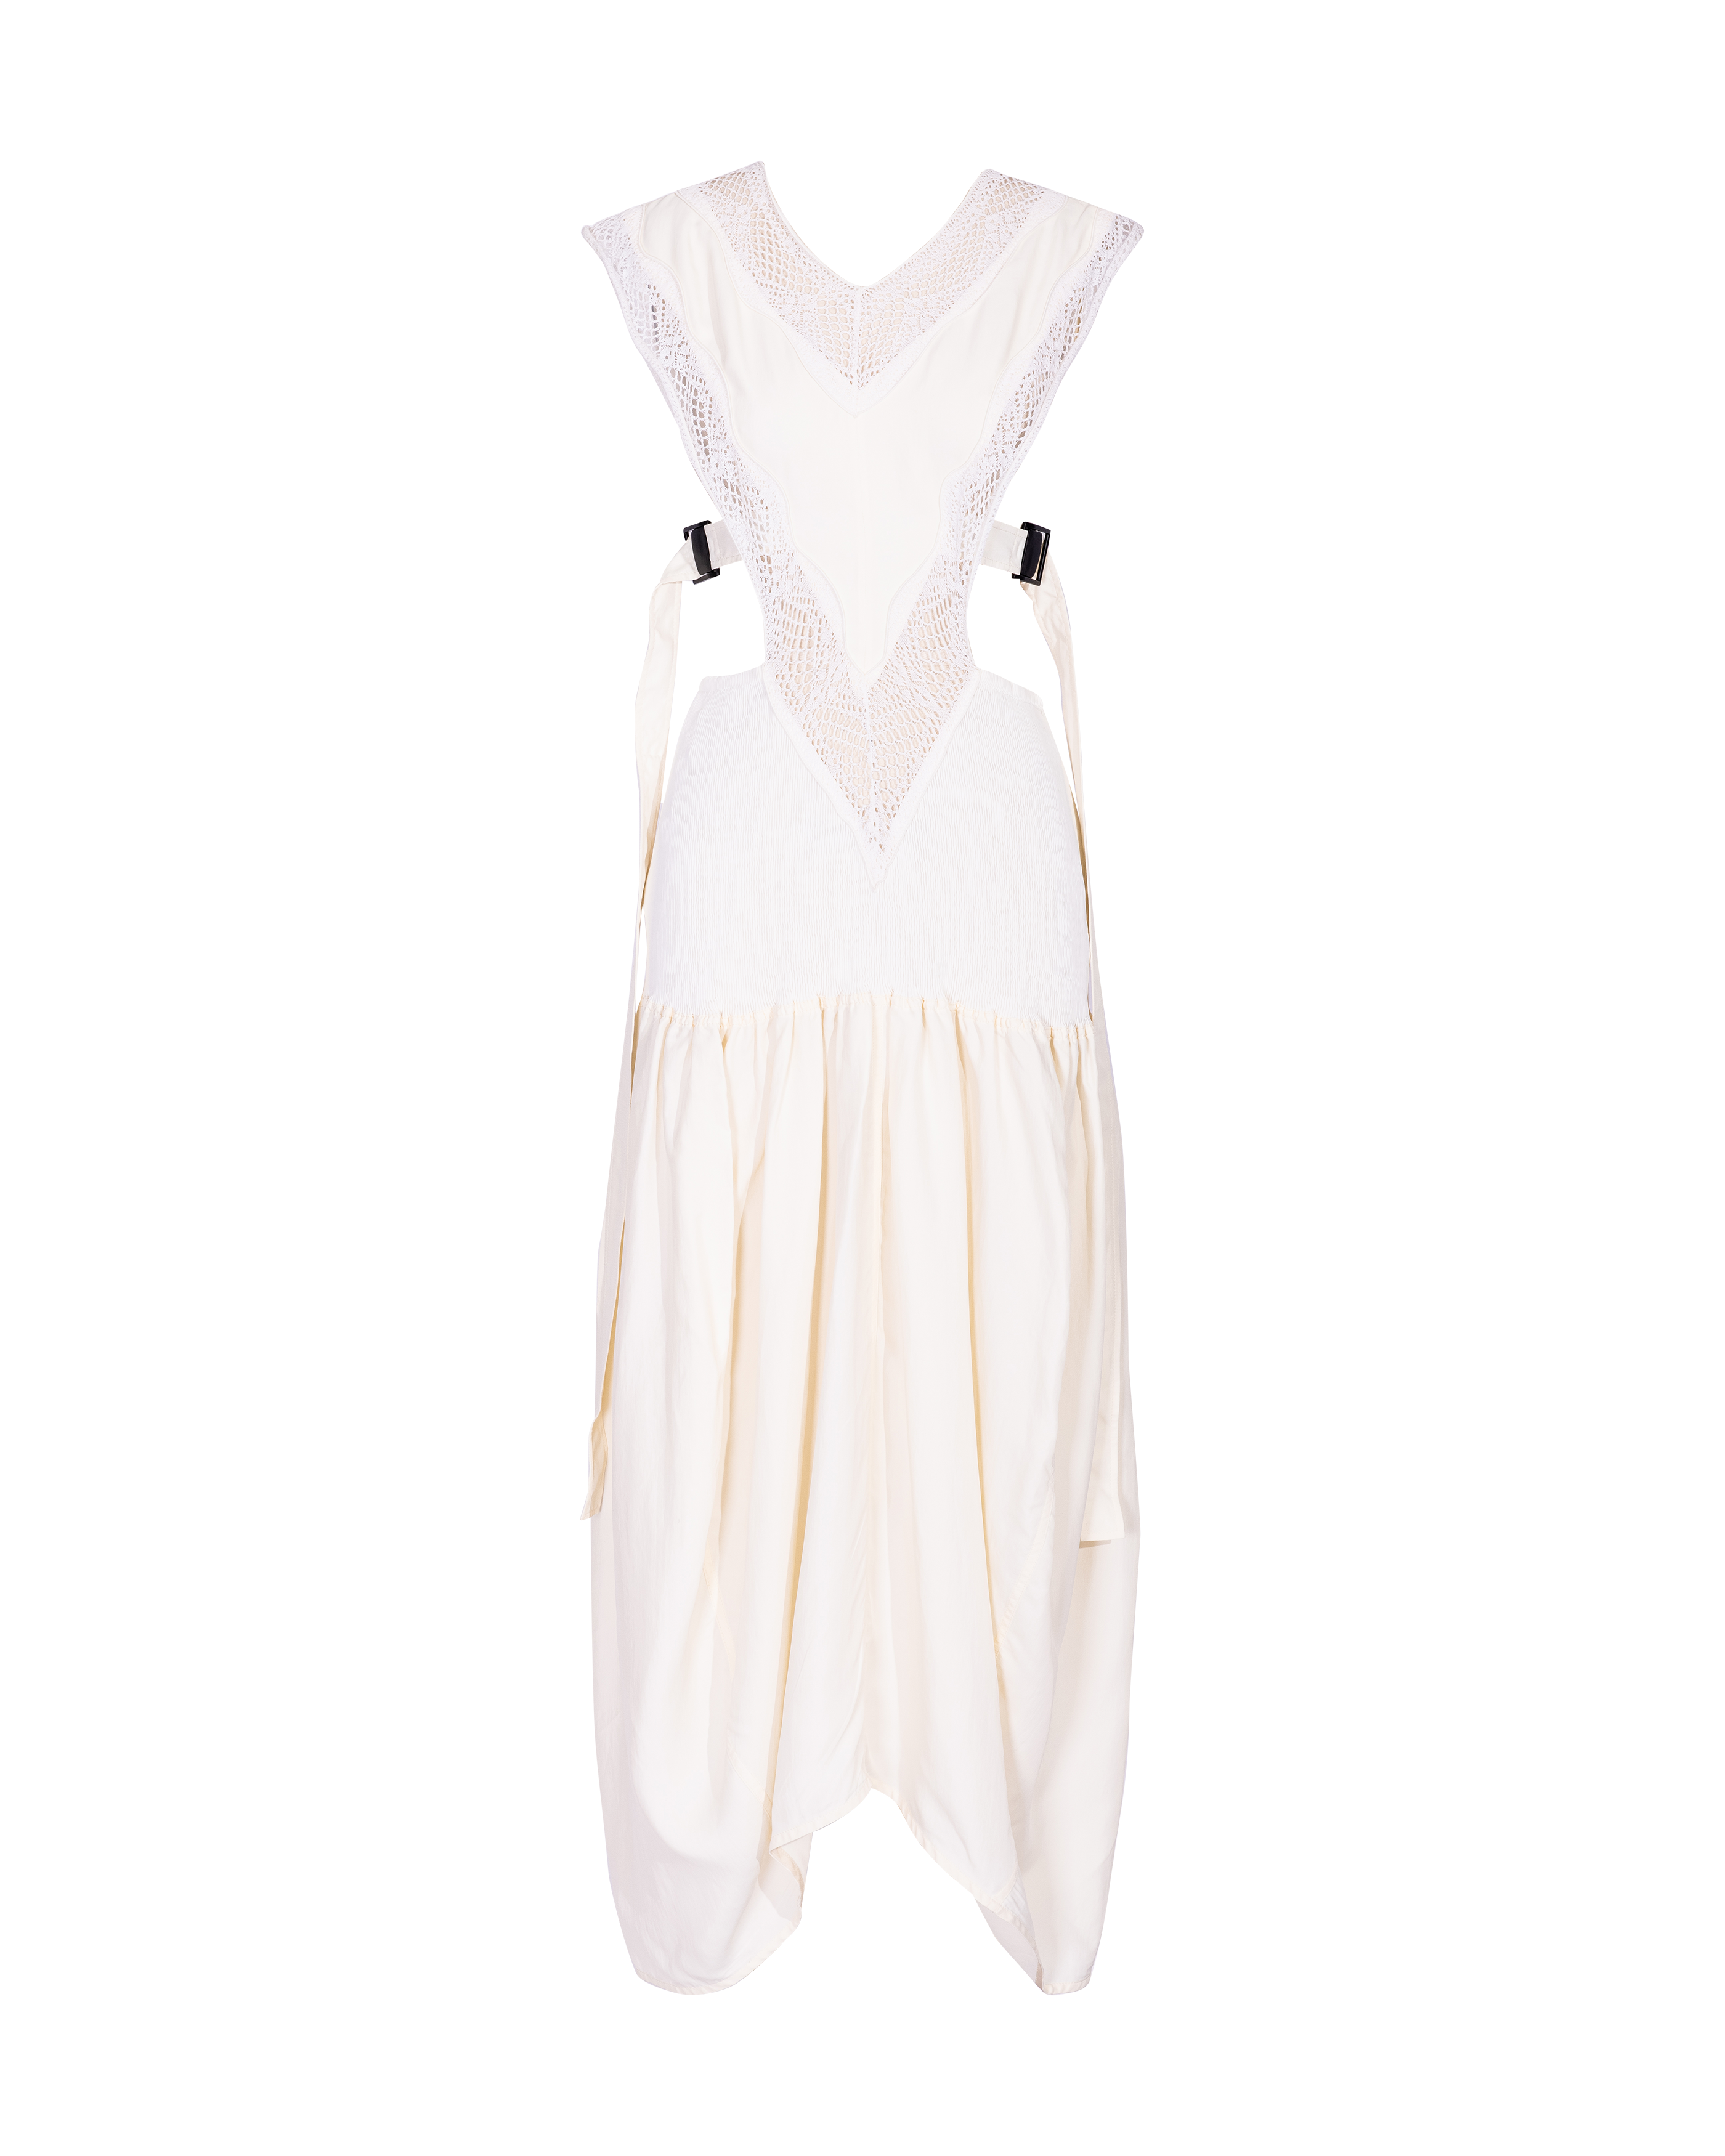 S/S 2018 Ecru Openwork Midi Dress